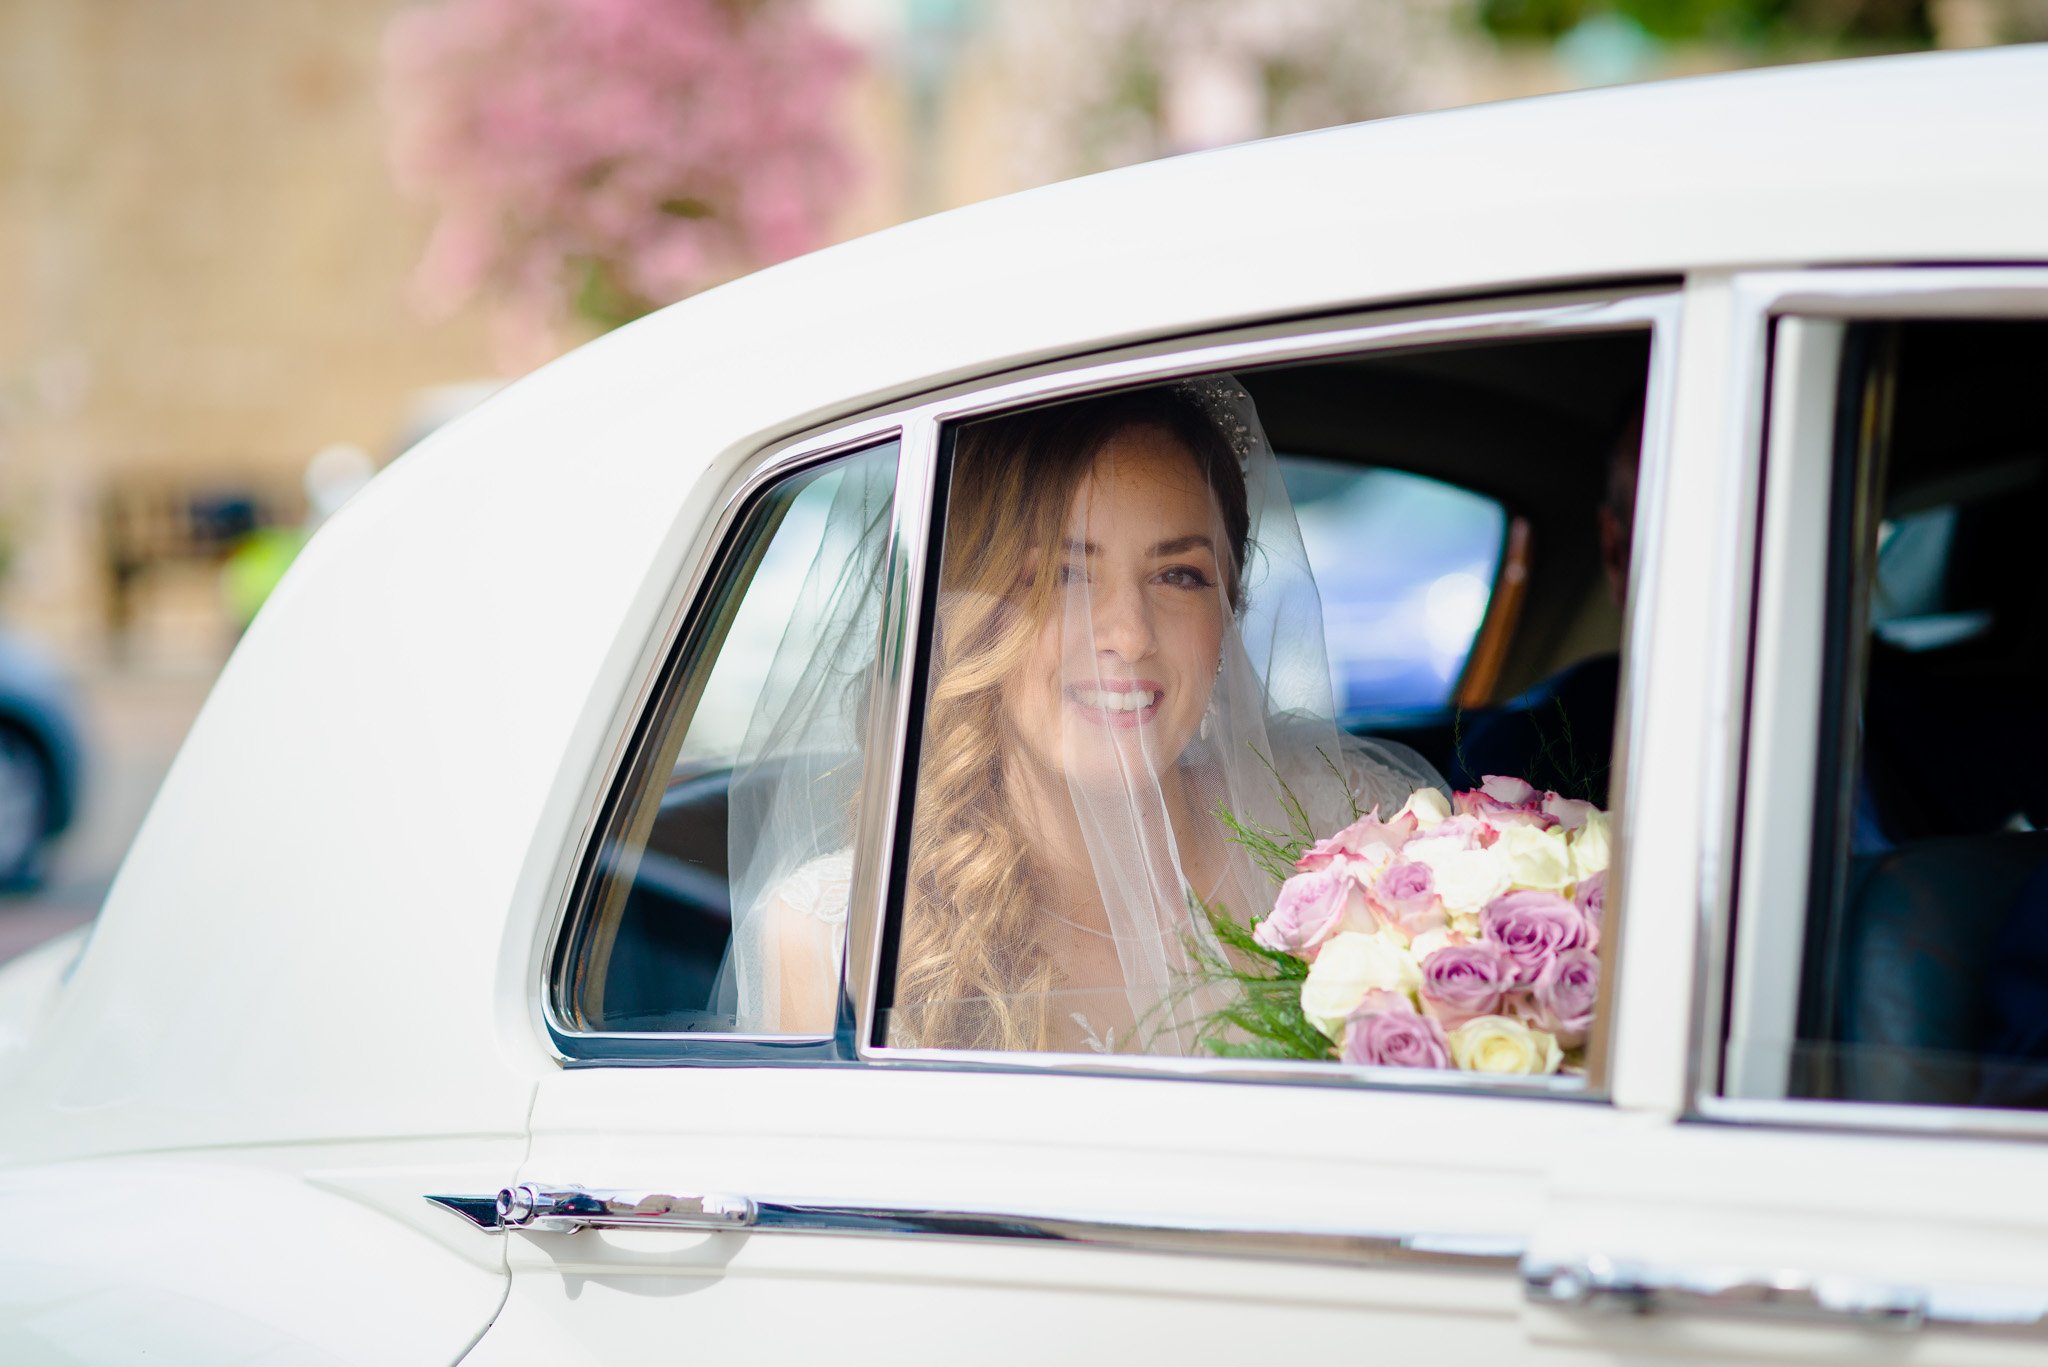 Bride arriving for a wedding, image taken through a car window